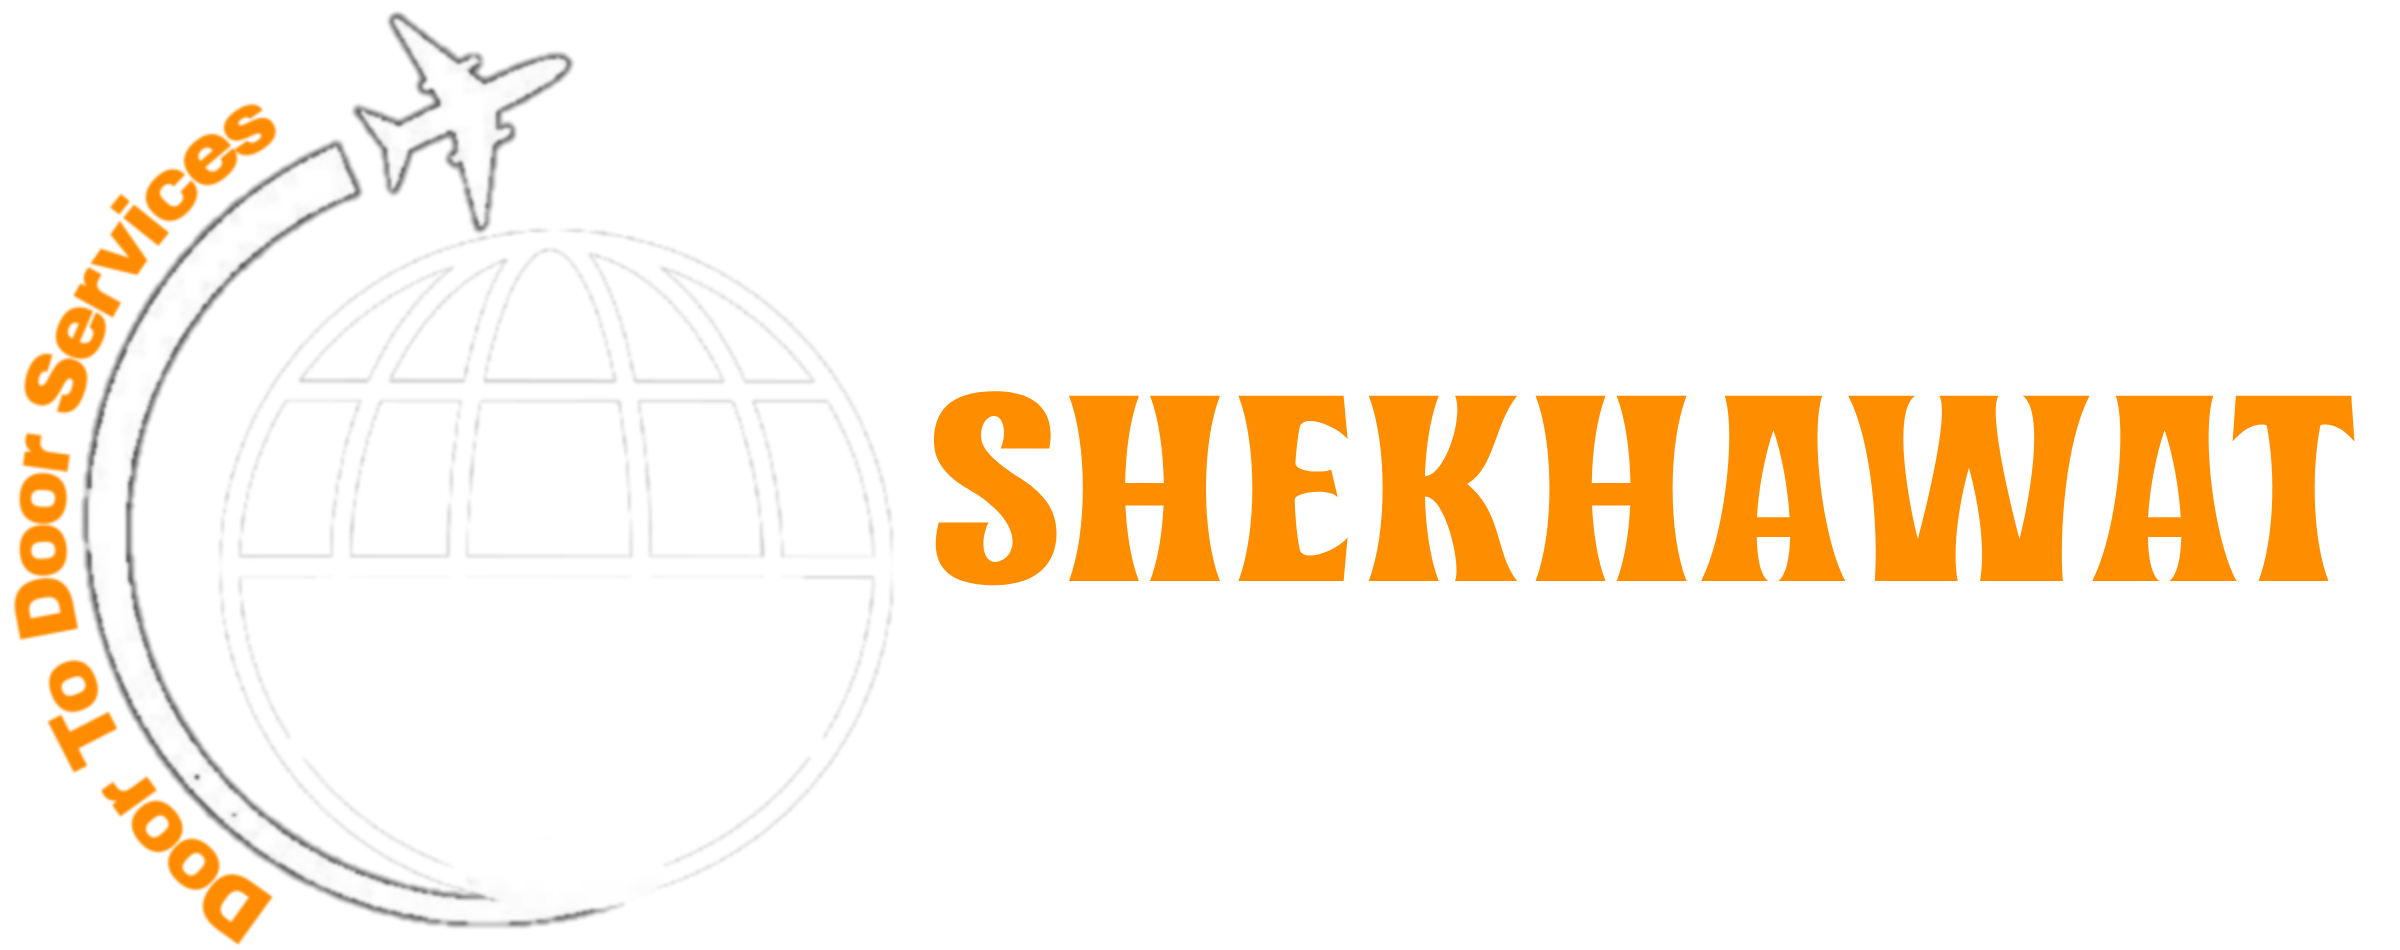 Shekhawat packers and movers logo